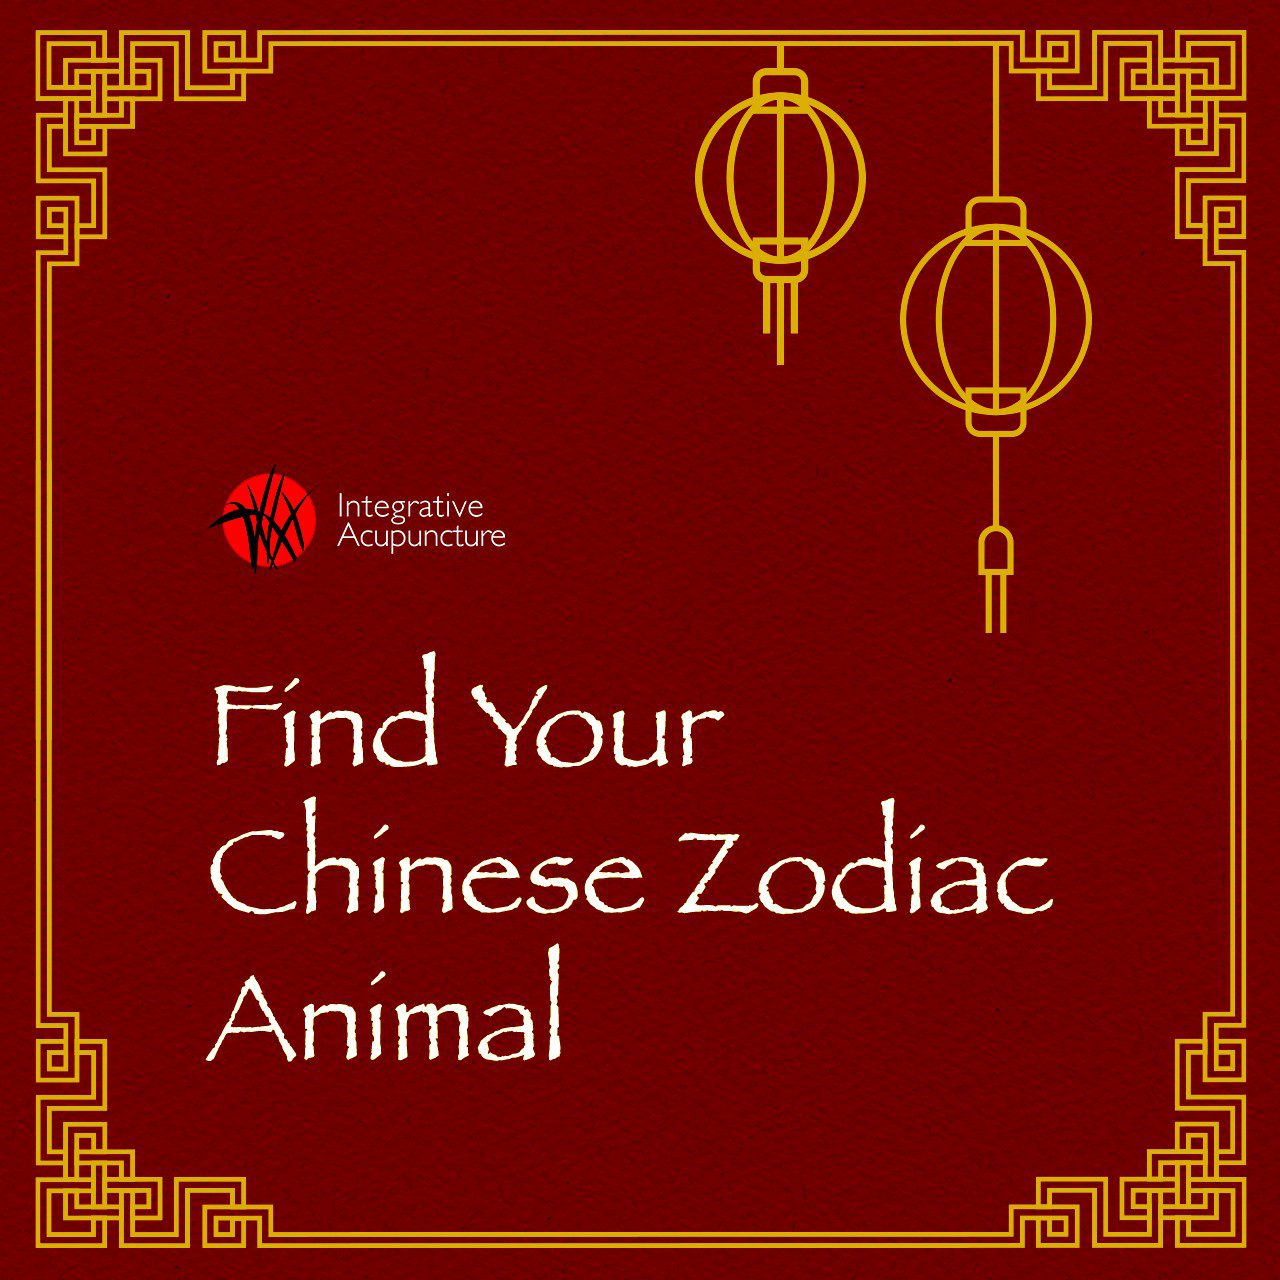 Chinese Zodiac Calculator Find Your Chinese Zodiac Animal